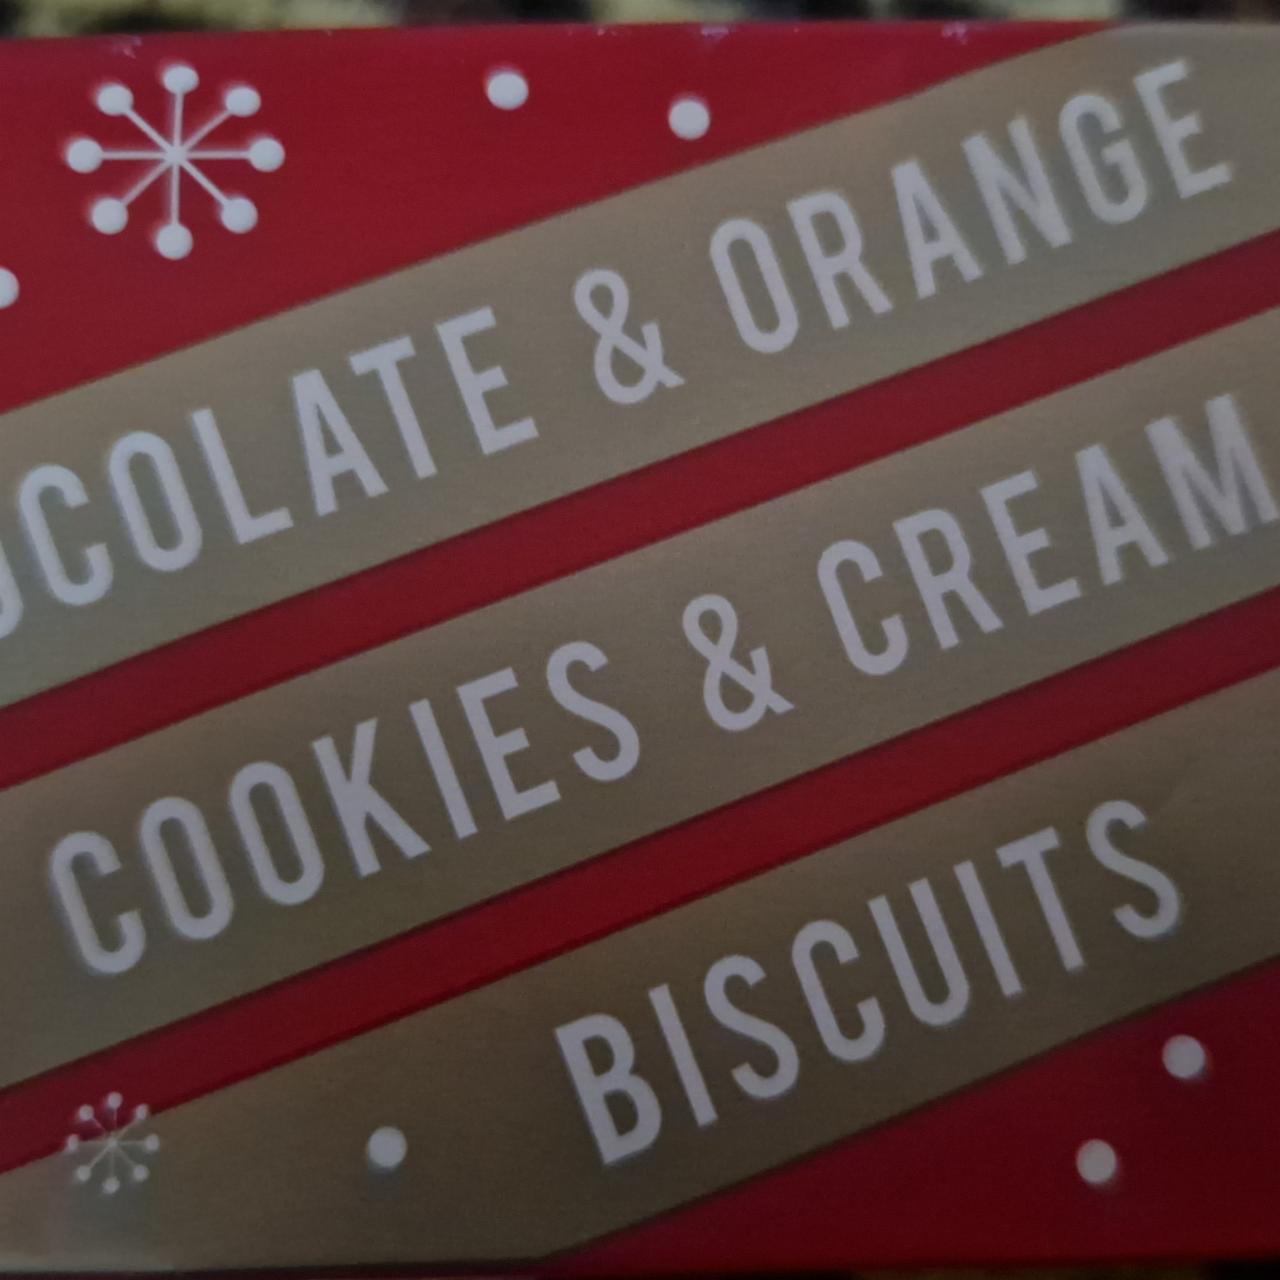 Fotografie - Chocolate & Orange Cookies & Cream Biscuits Marks & Spencer